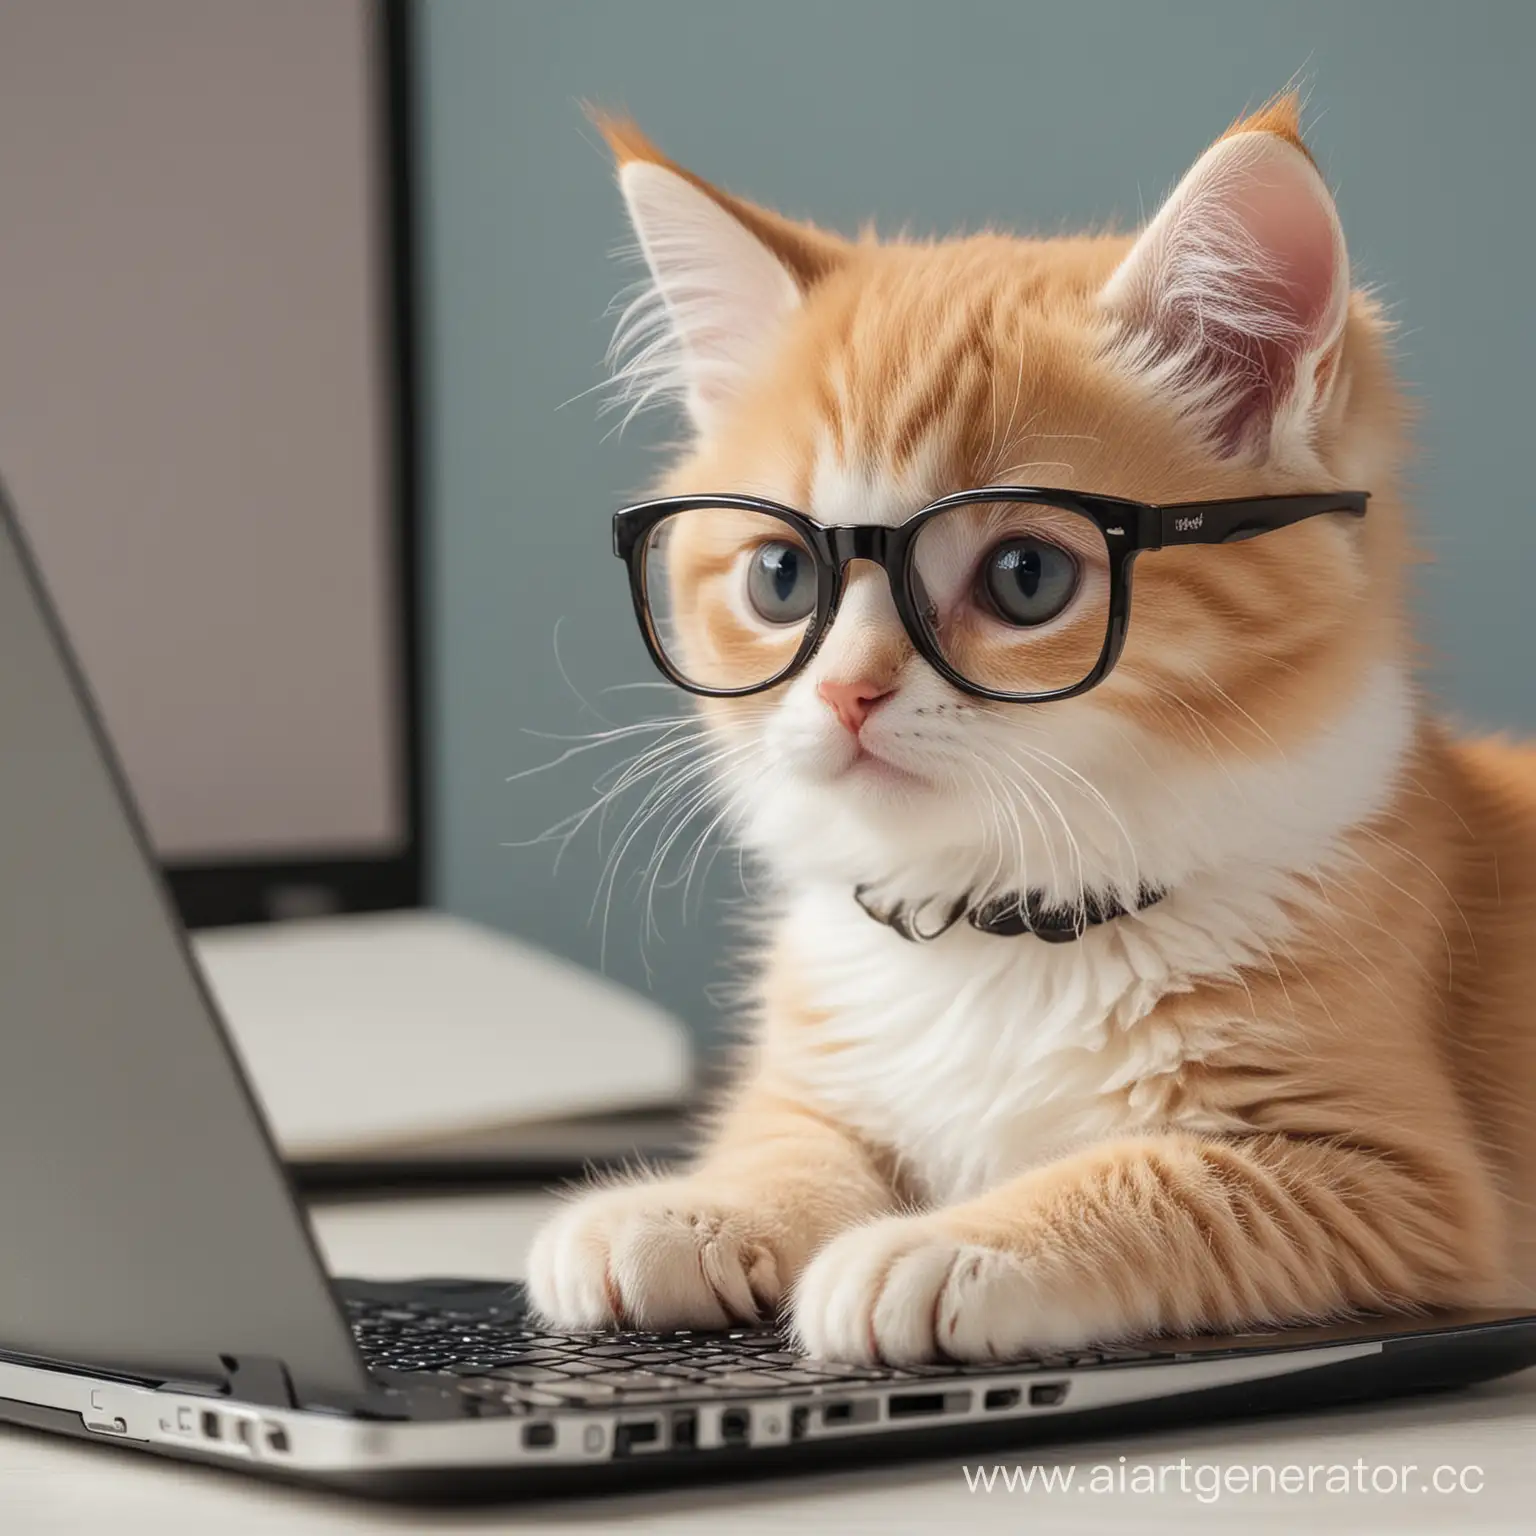 Cute-Kitten-Wearing-Glasses-Fascinated-by-Laptop-Screen